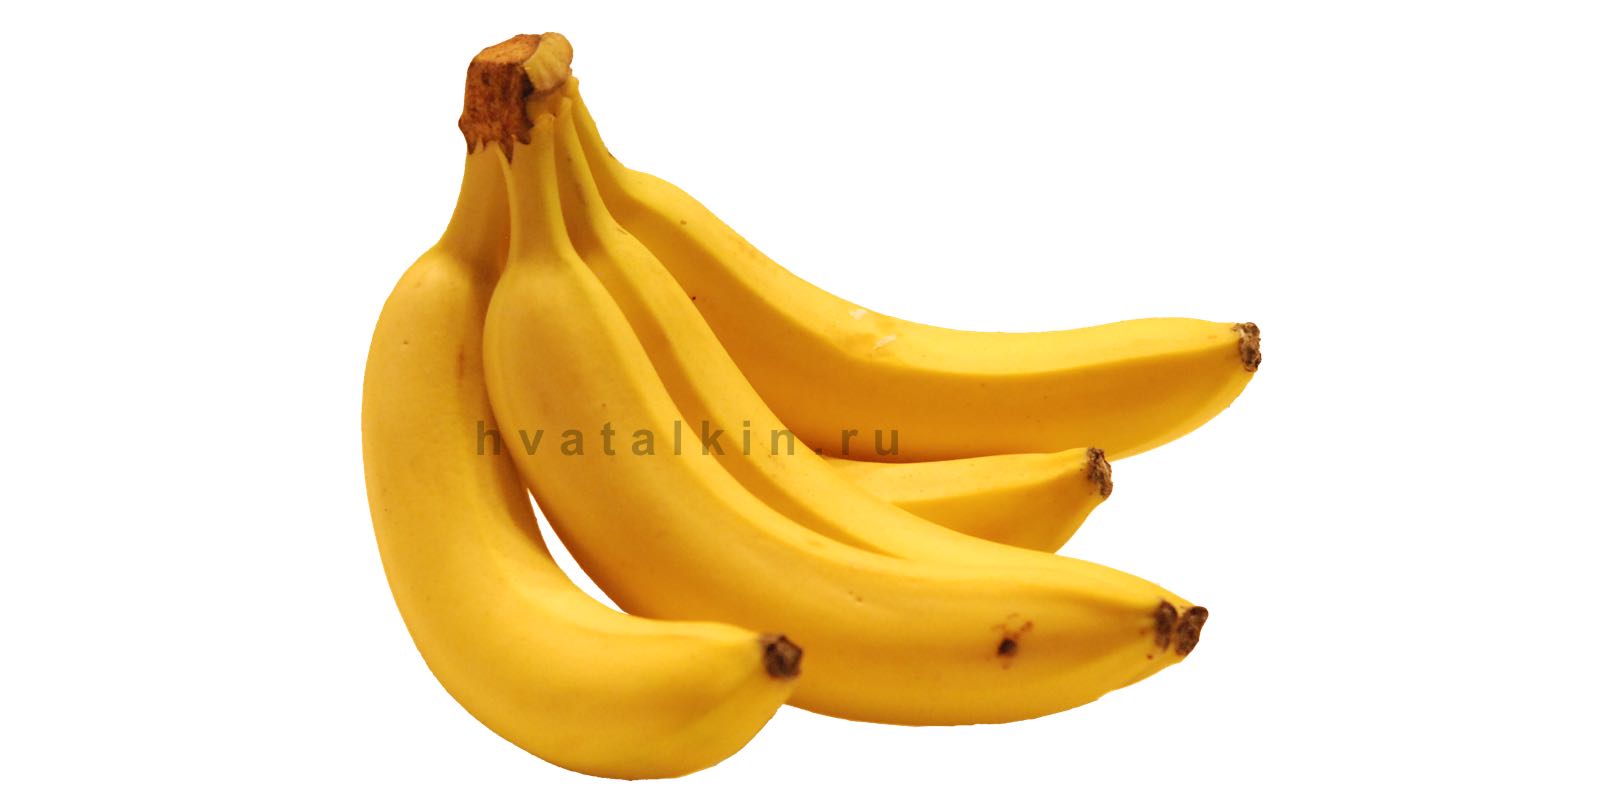 Банан в качестве прикорма для ребенка